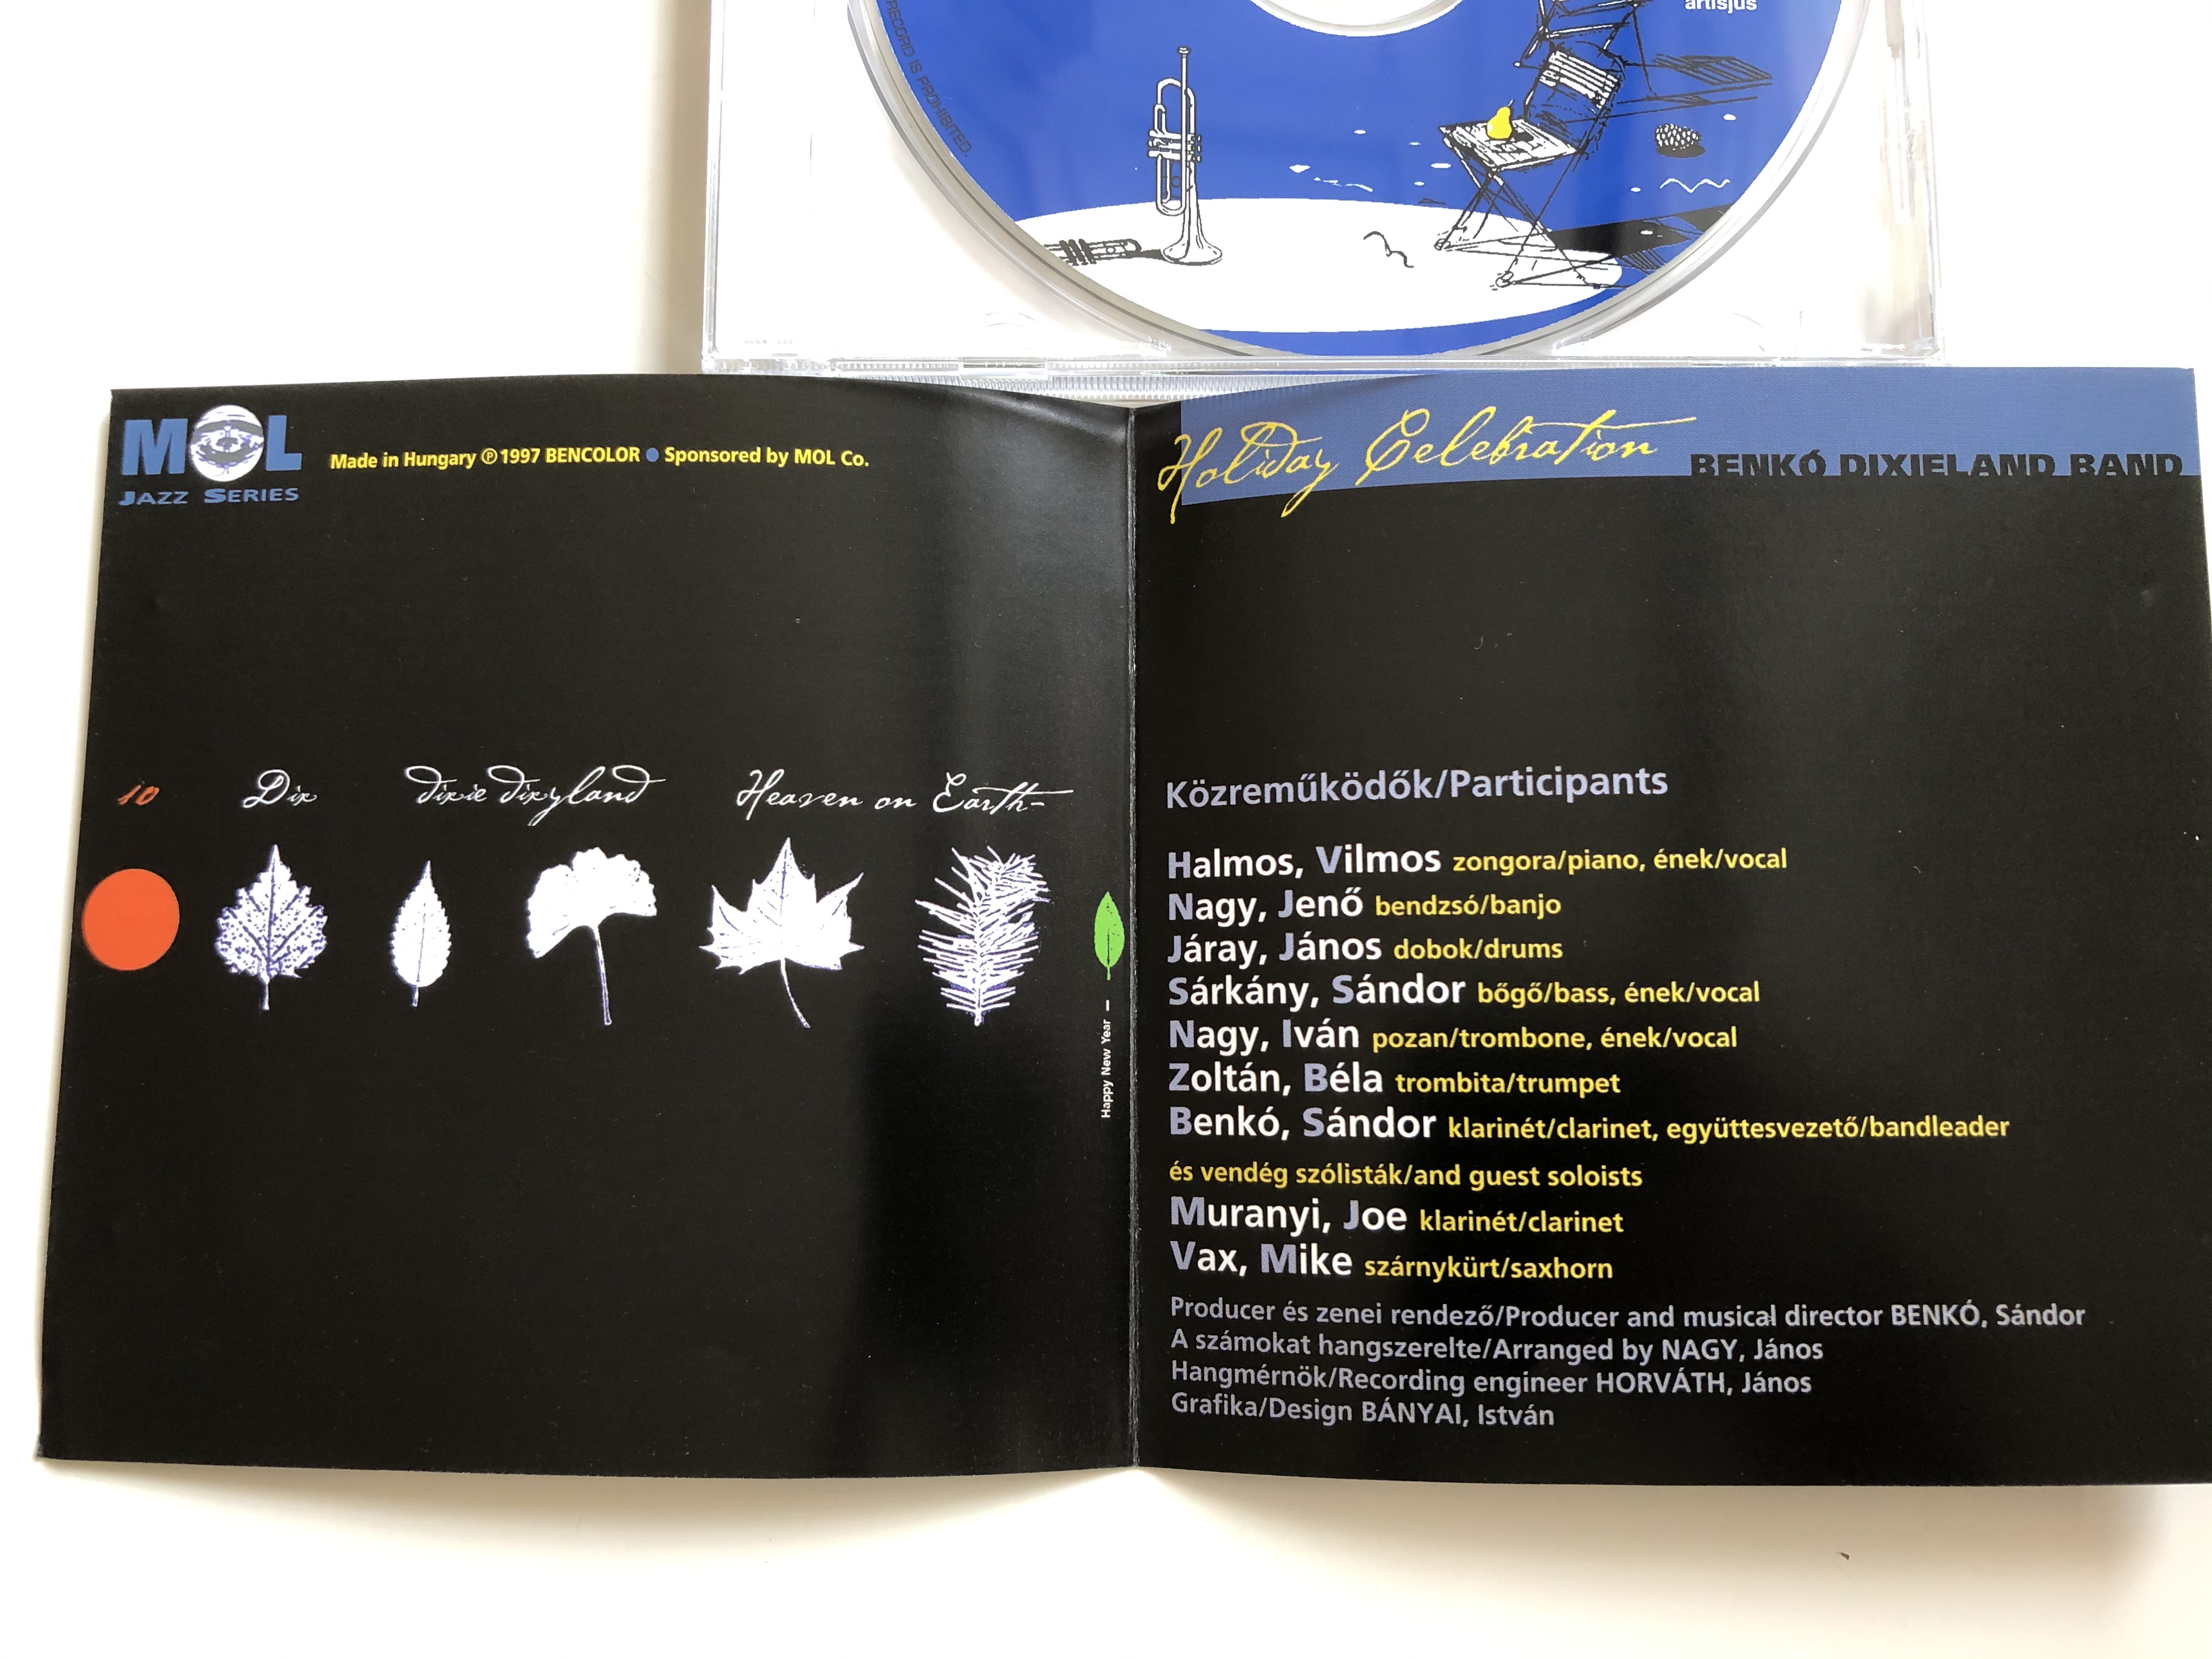 benk-dixieland-band-holiday-celebration-bencolor-audio-cd-1997-stereo-ben-cd-5409-2-.jpg